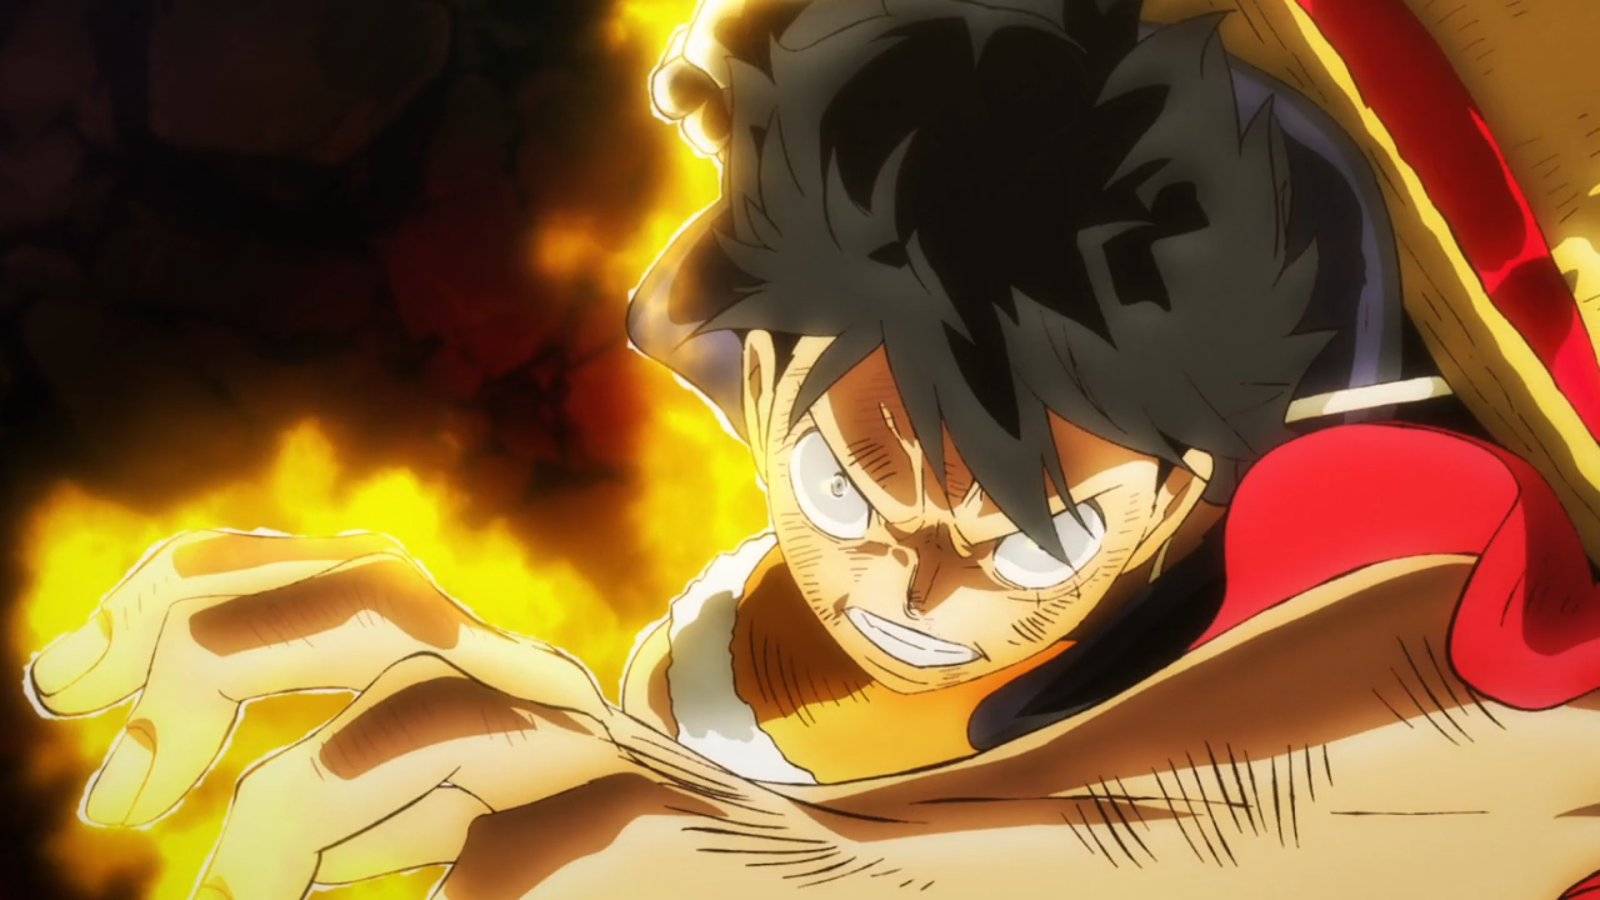 Blackjack Rants: One Piece Anime: Wano Arc, Episodes 1026-1028